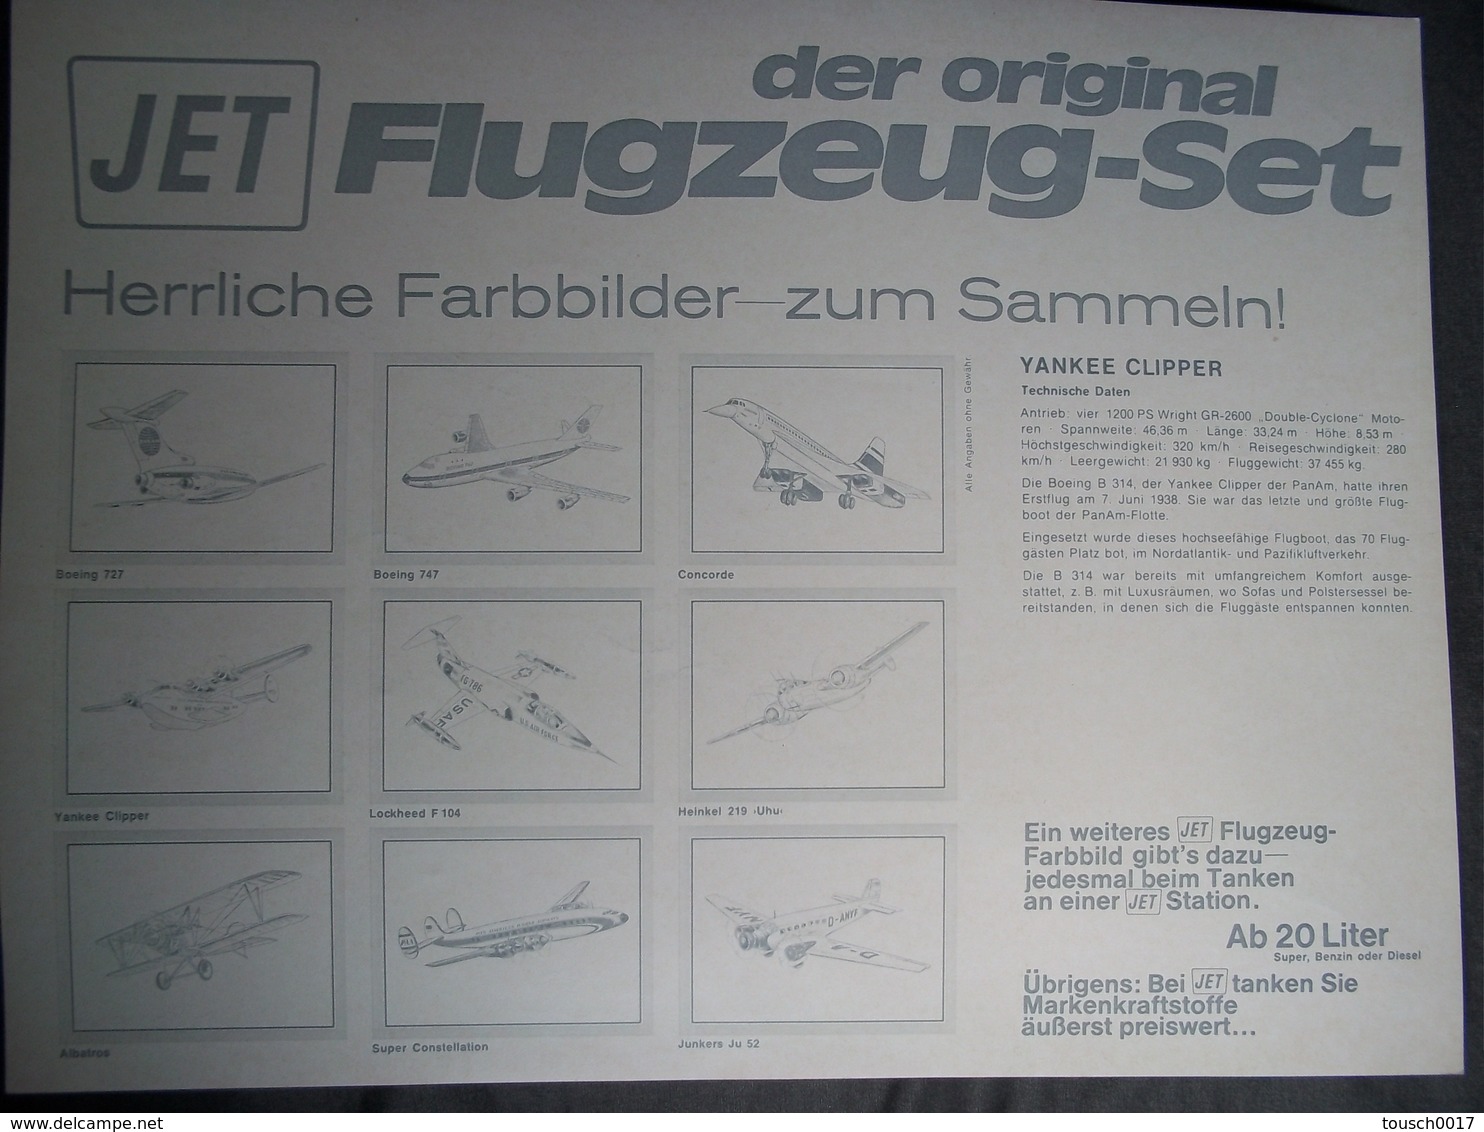 Jet Tankstelle sammelbild 9x original Flugzeug-set image avions a collectionnées station Jet années 70